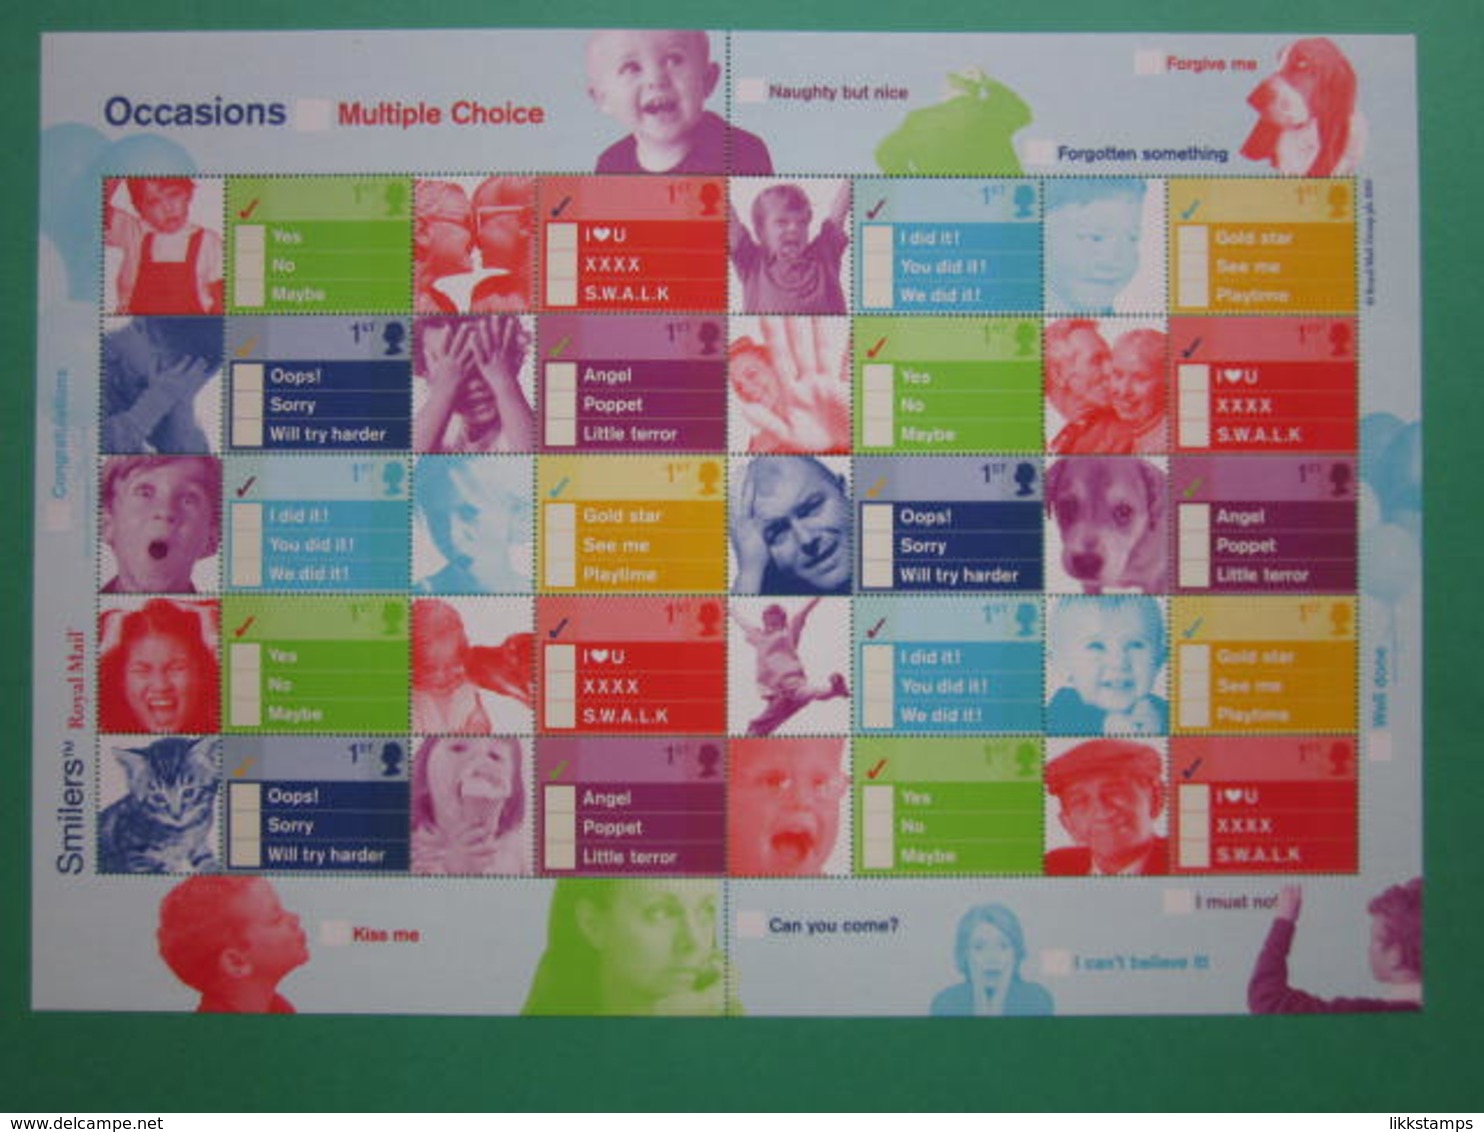 2003 ROYAL MAIL 'TICK BOX' OCCASIONS GENERIC SMILERS SHEET. #SS0015 - Personalisierte Briefmarken